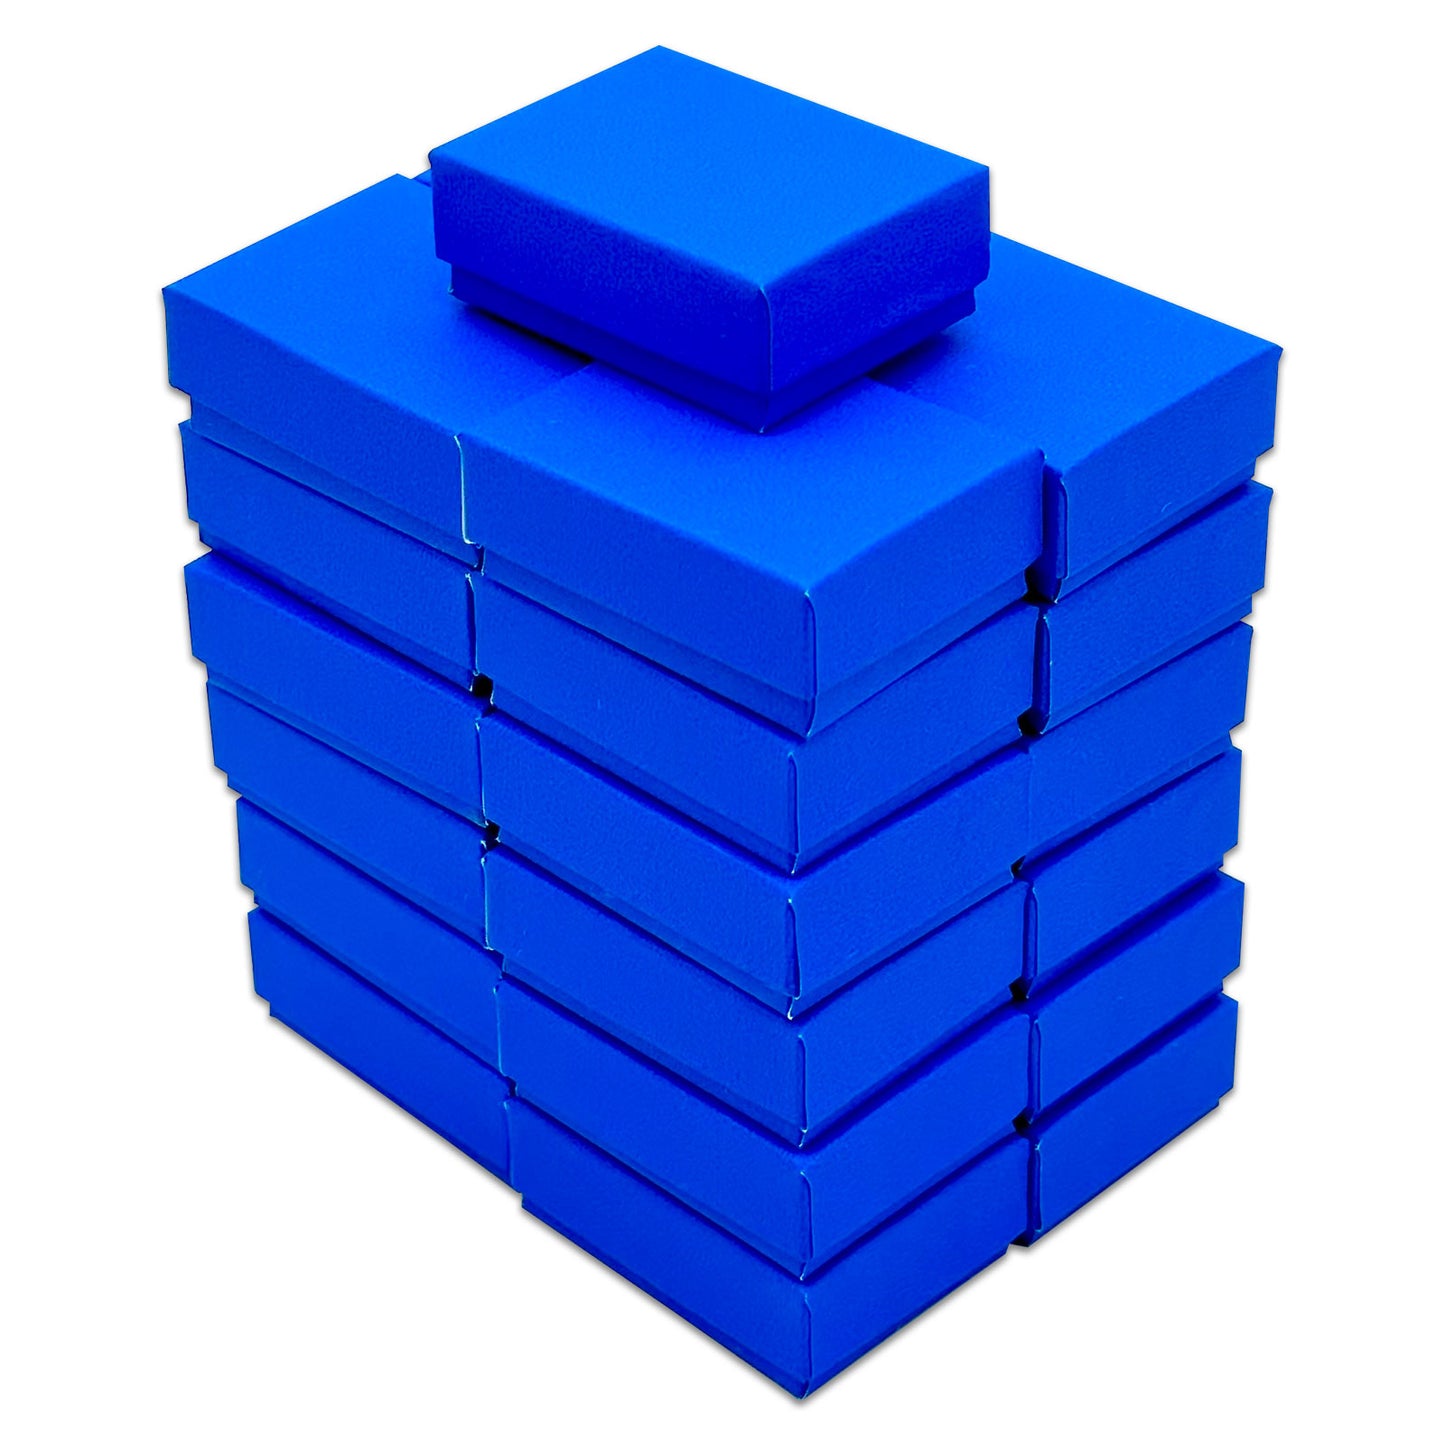 2 1/8" x 1 5/8" x 3/4" Neon Blue Cotton Filled Paper Box